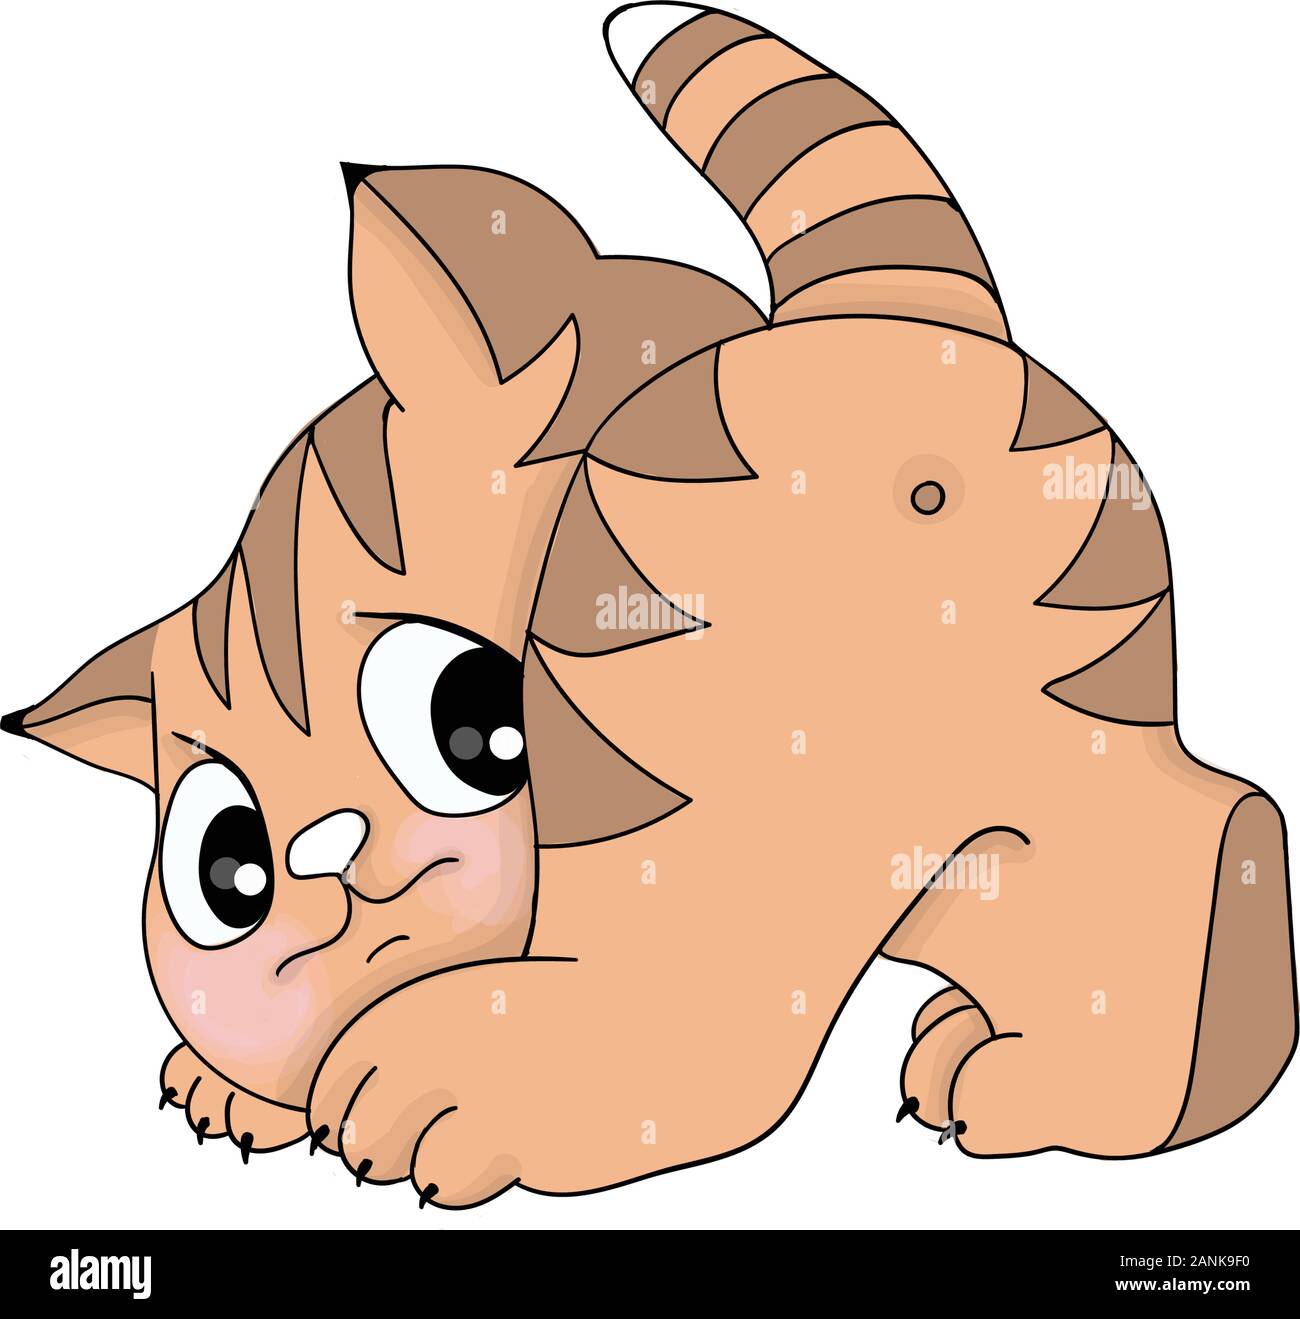 Vector Illustrations Imaje Of Cartoon Ginger Tabby Kitten Valentine Stock Vector Image And Art Alamy 